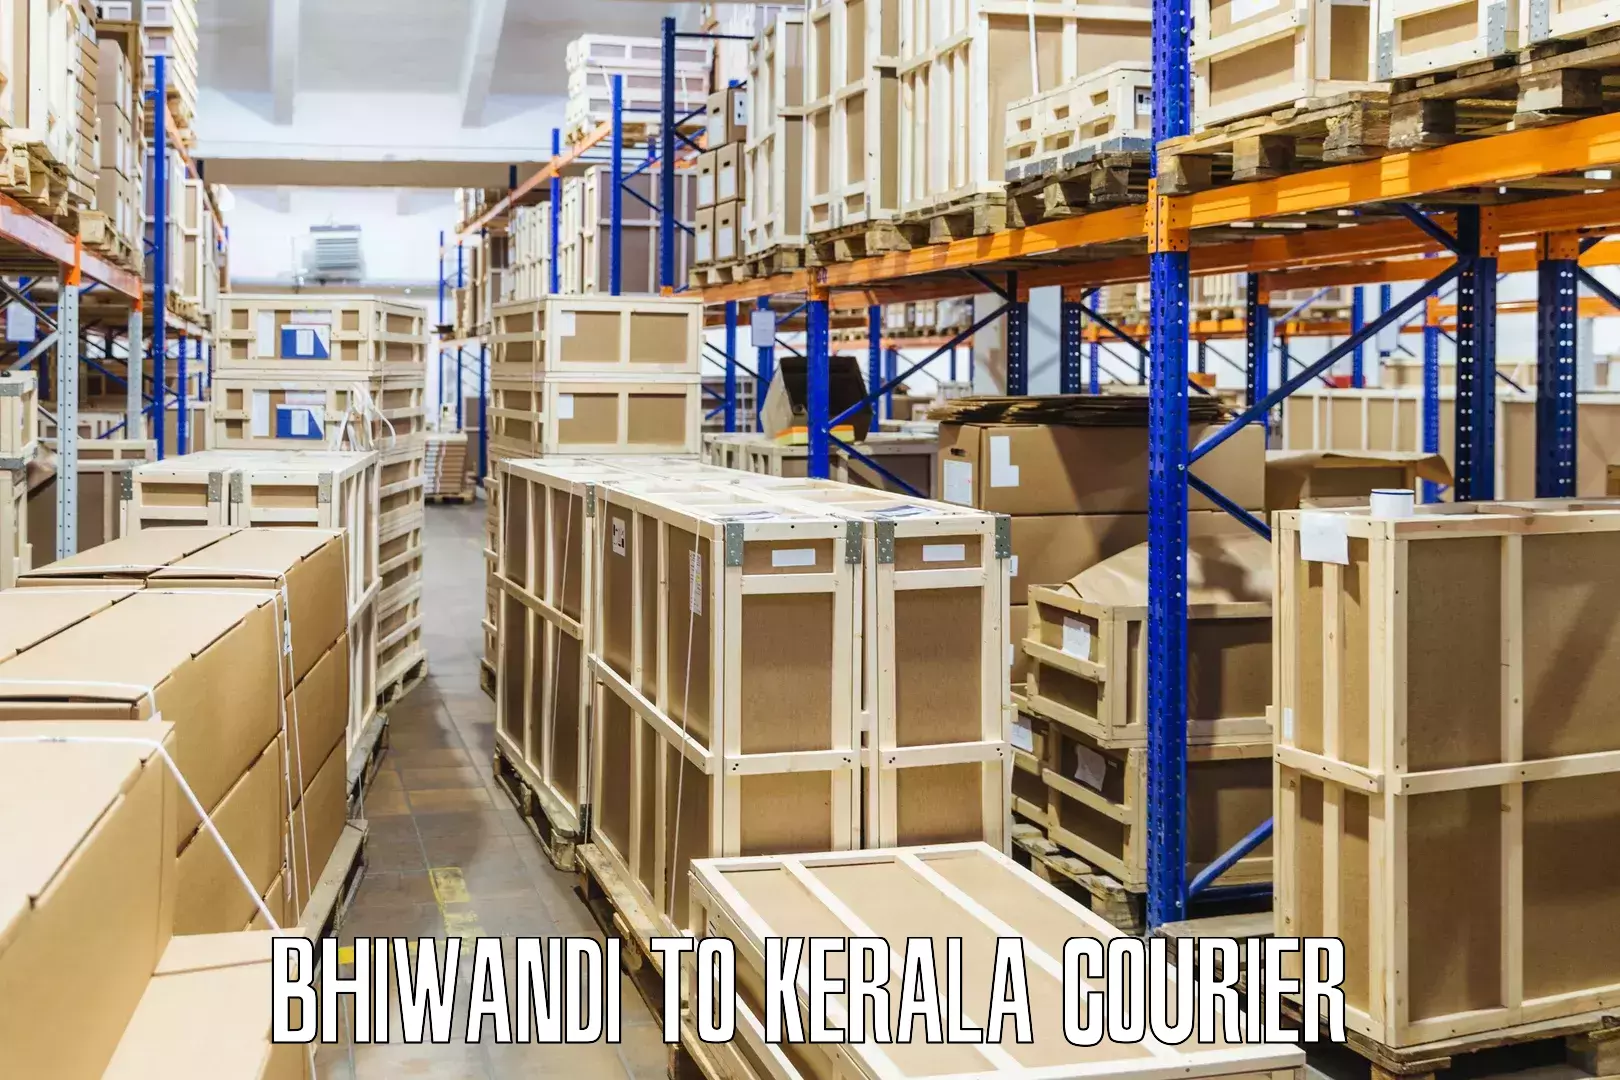 Courier service comparison Bhiwandi to Kakkur